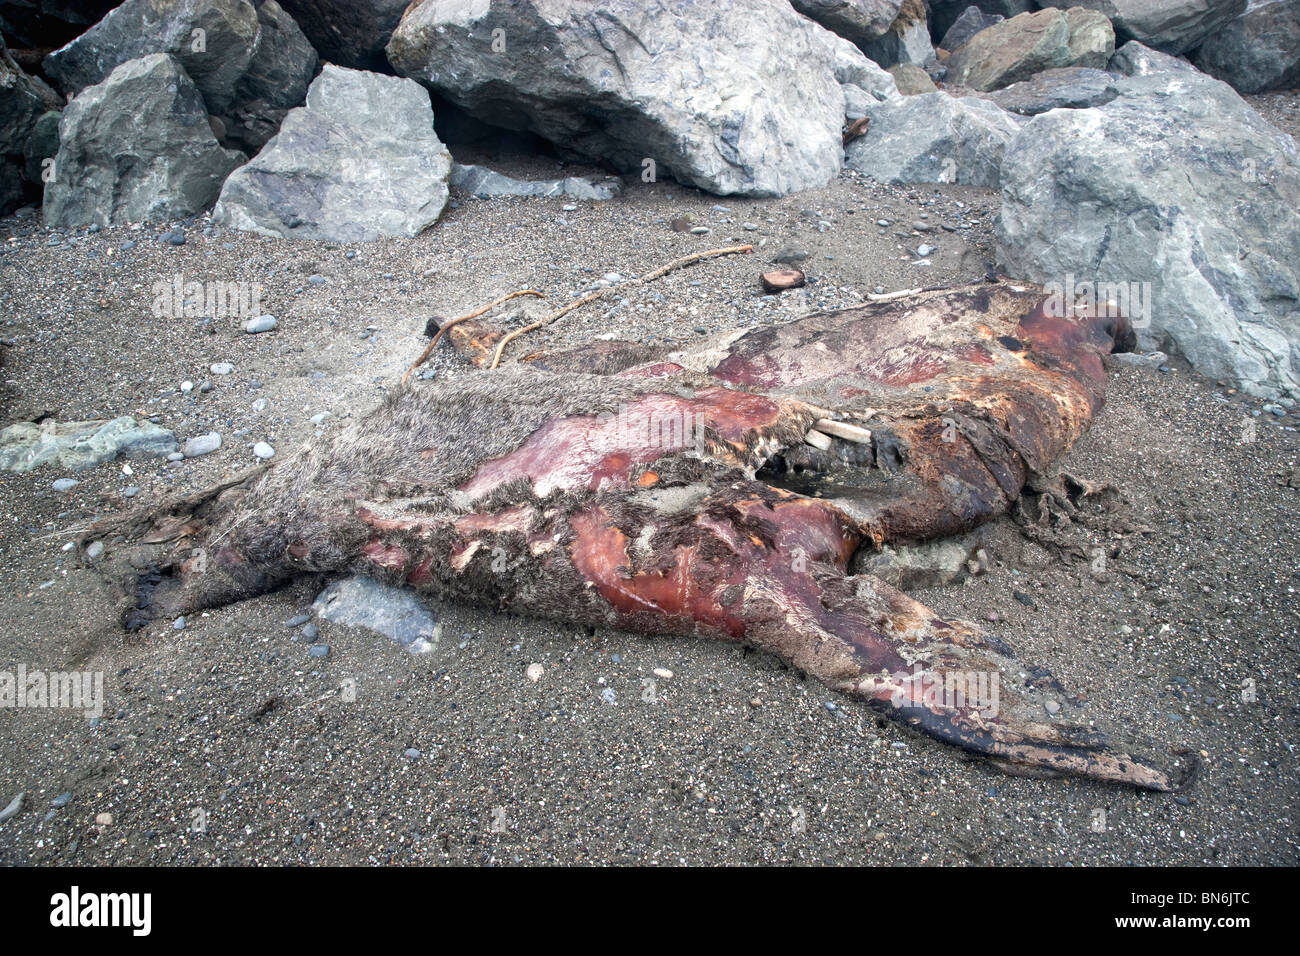 Mature Sea Lion decaying, beach, Stock Photo